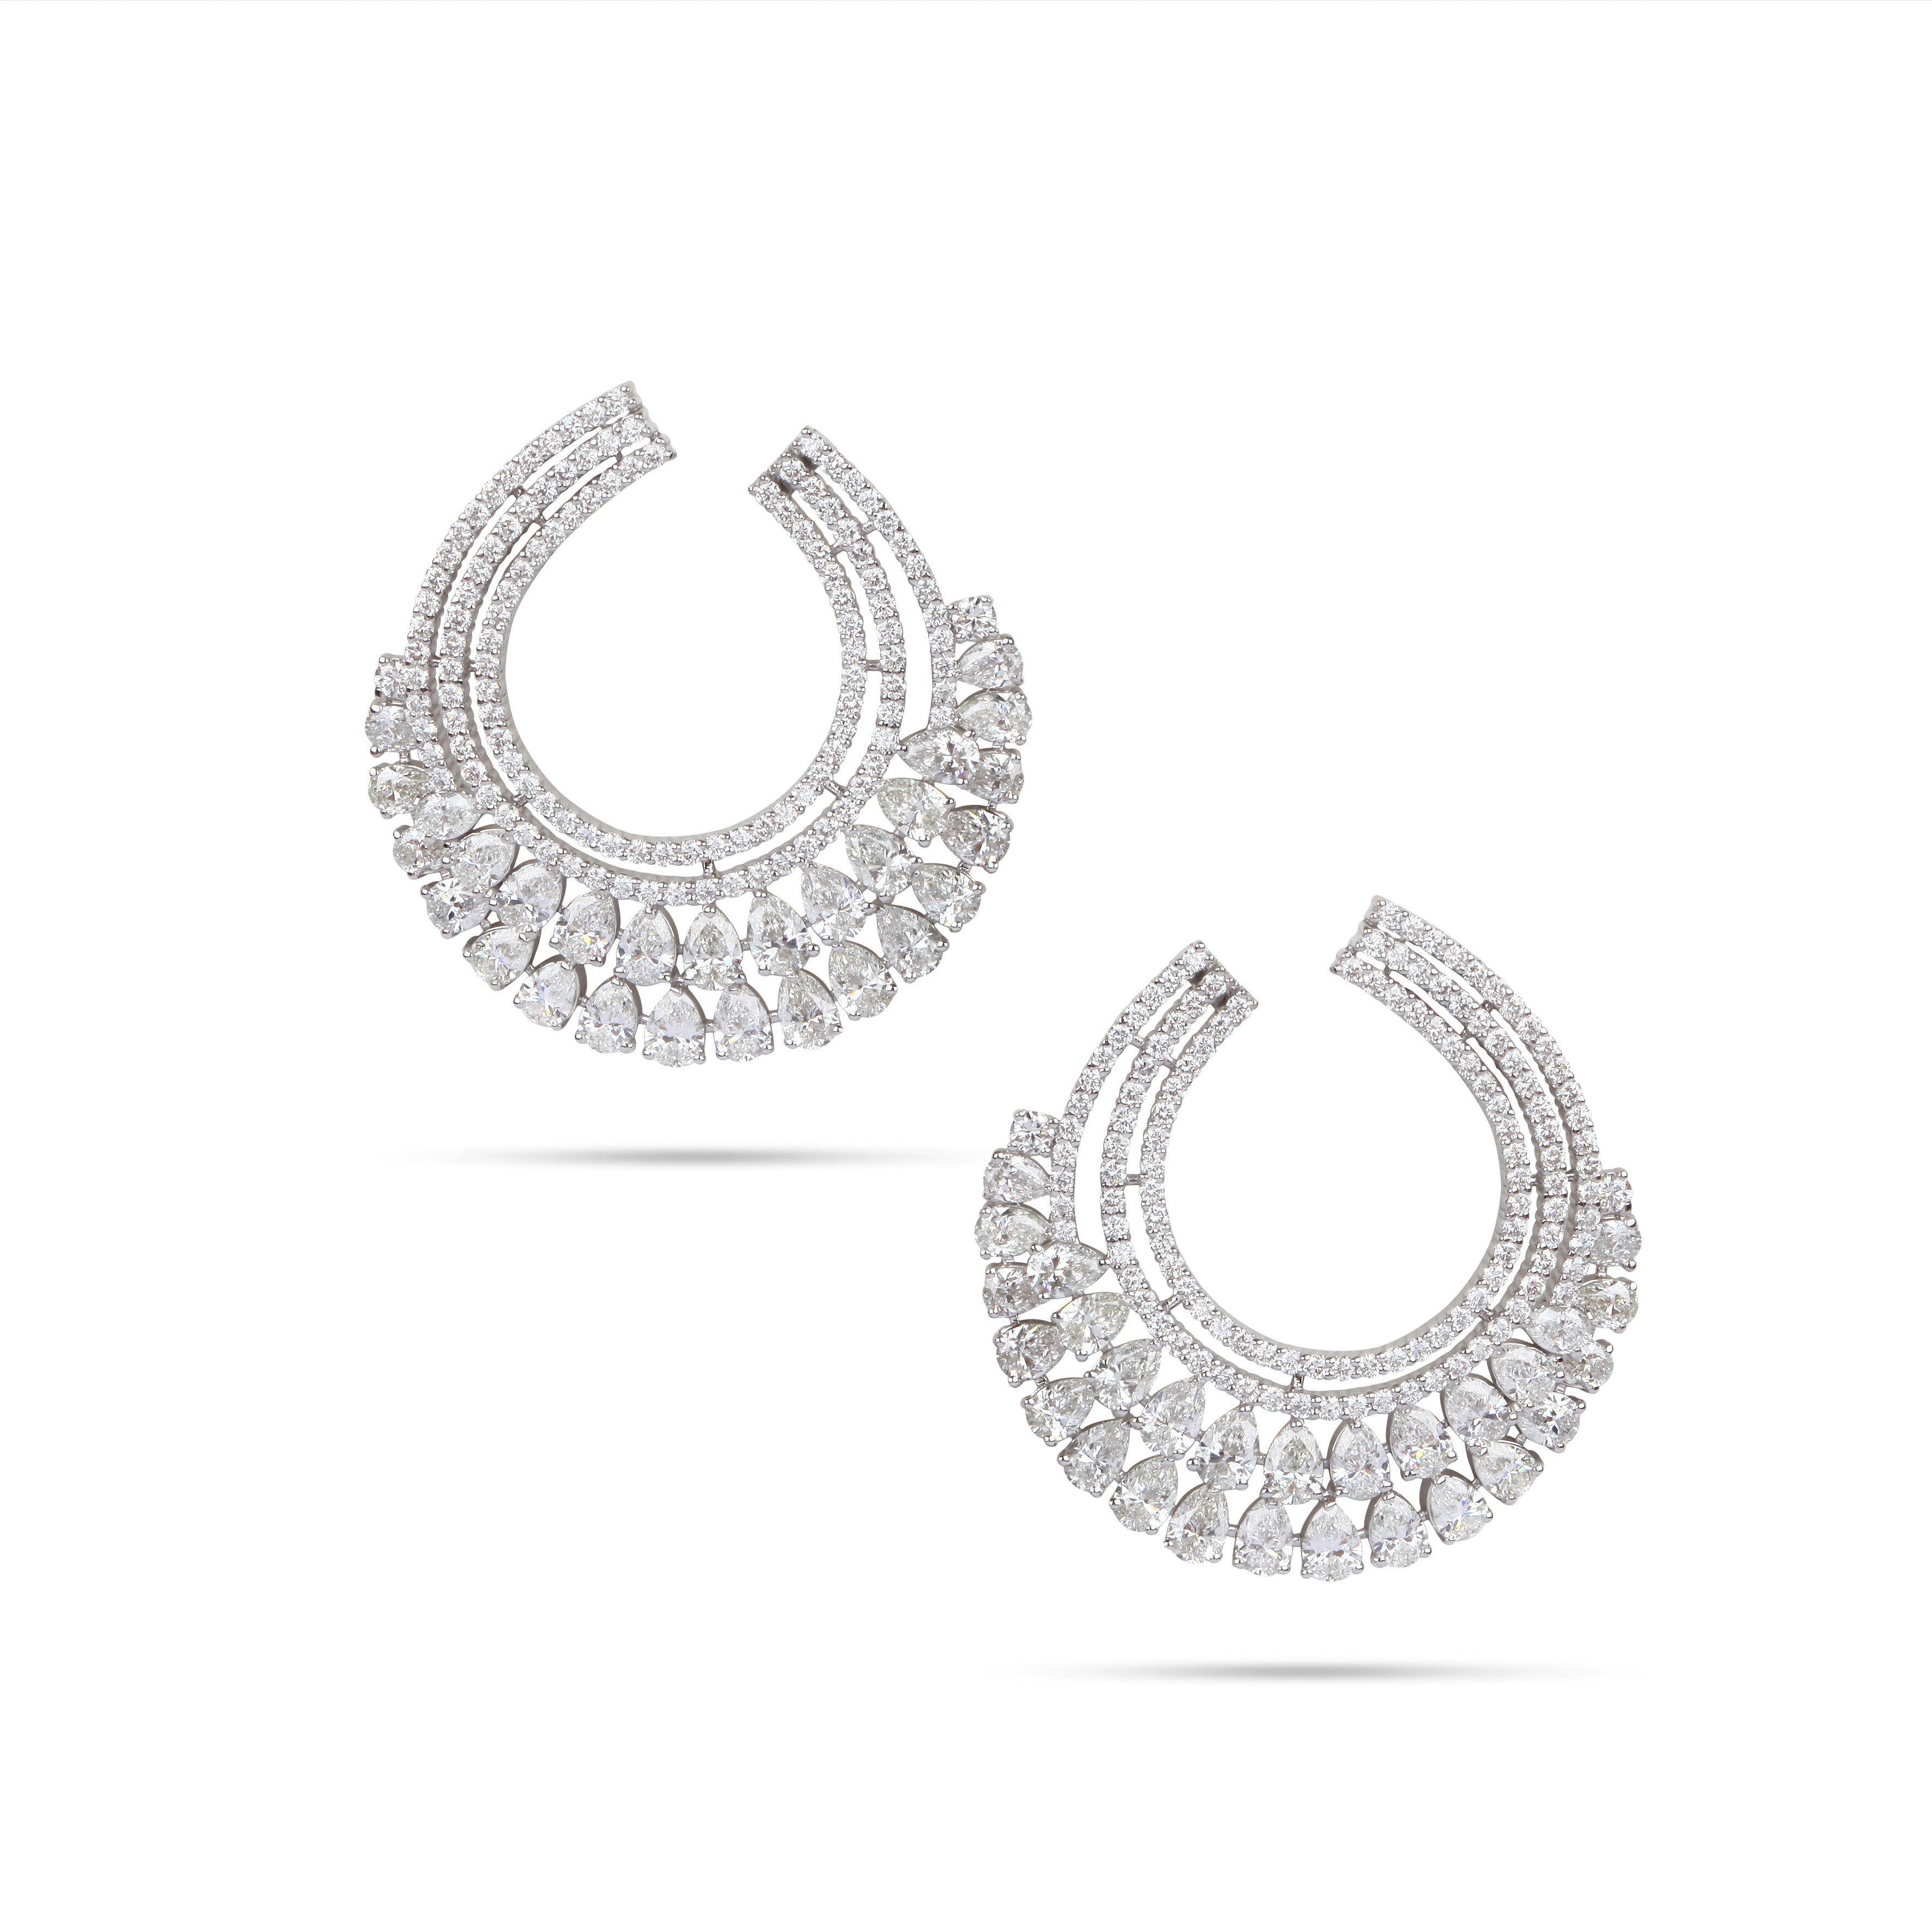 Earrings Online: Diamond Dangling Hoop Earrings | Jewellery Design ...